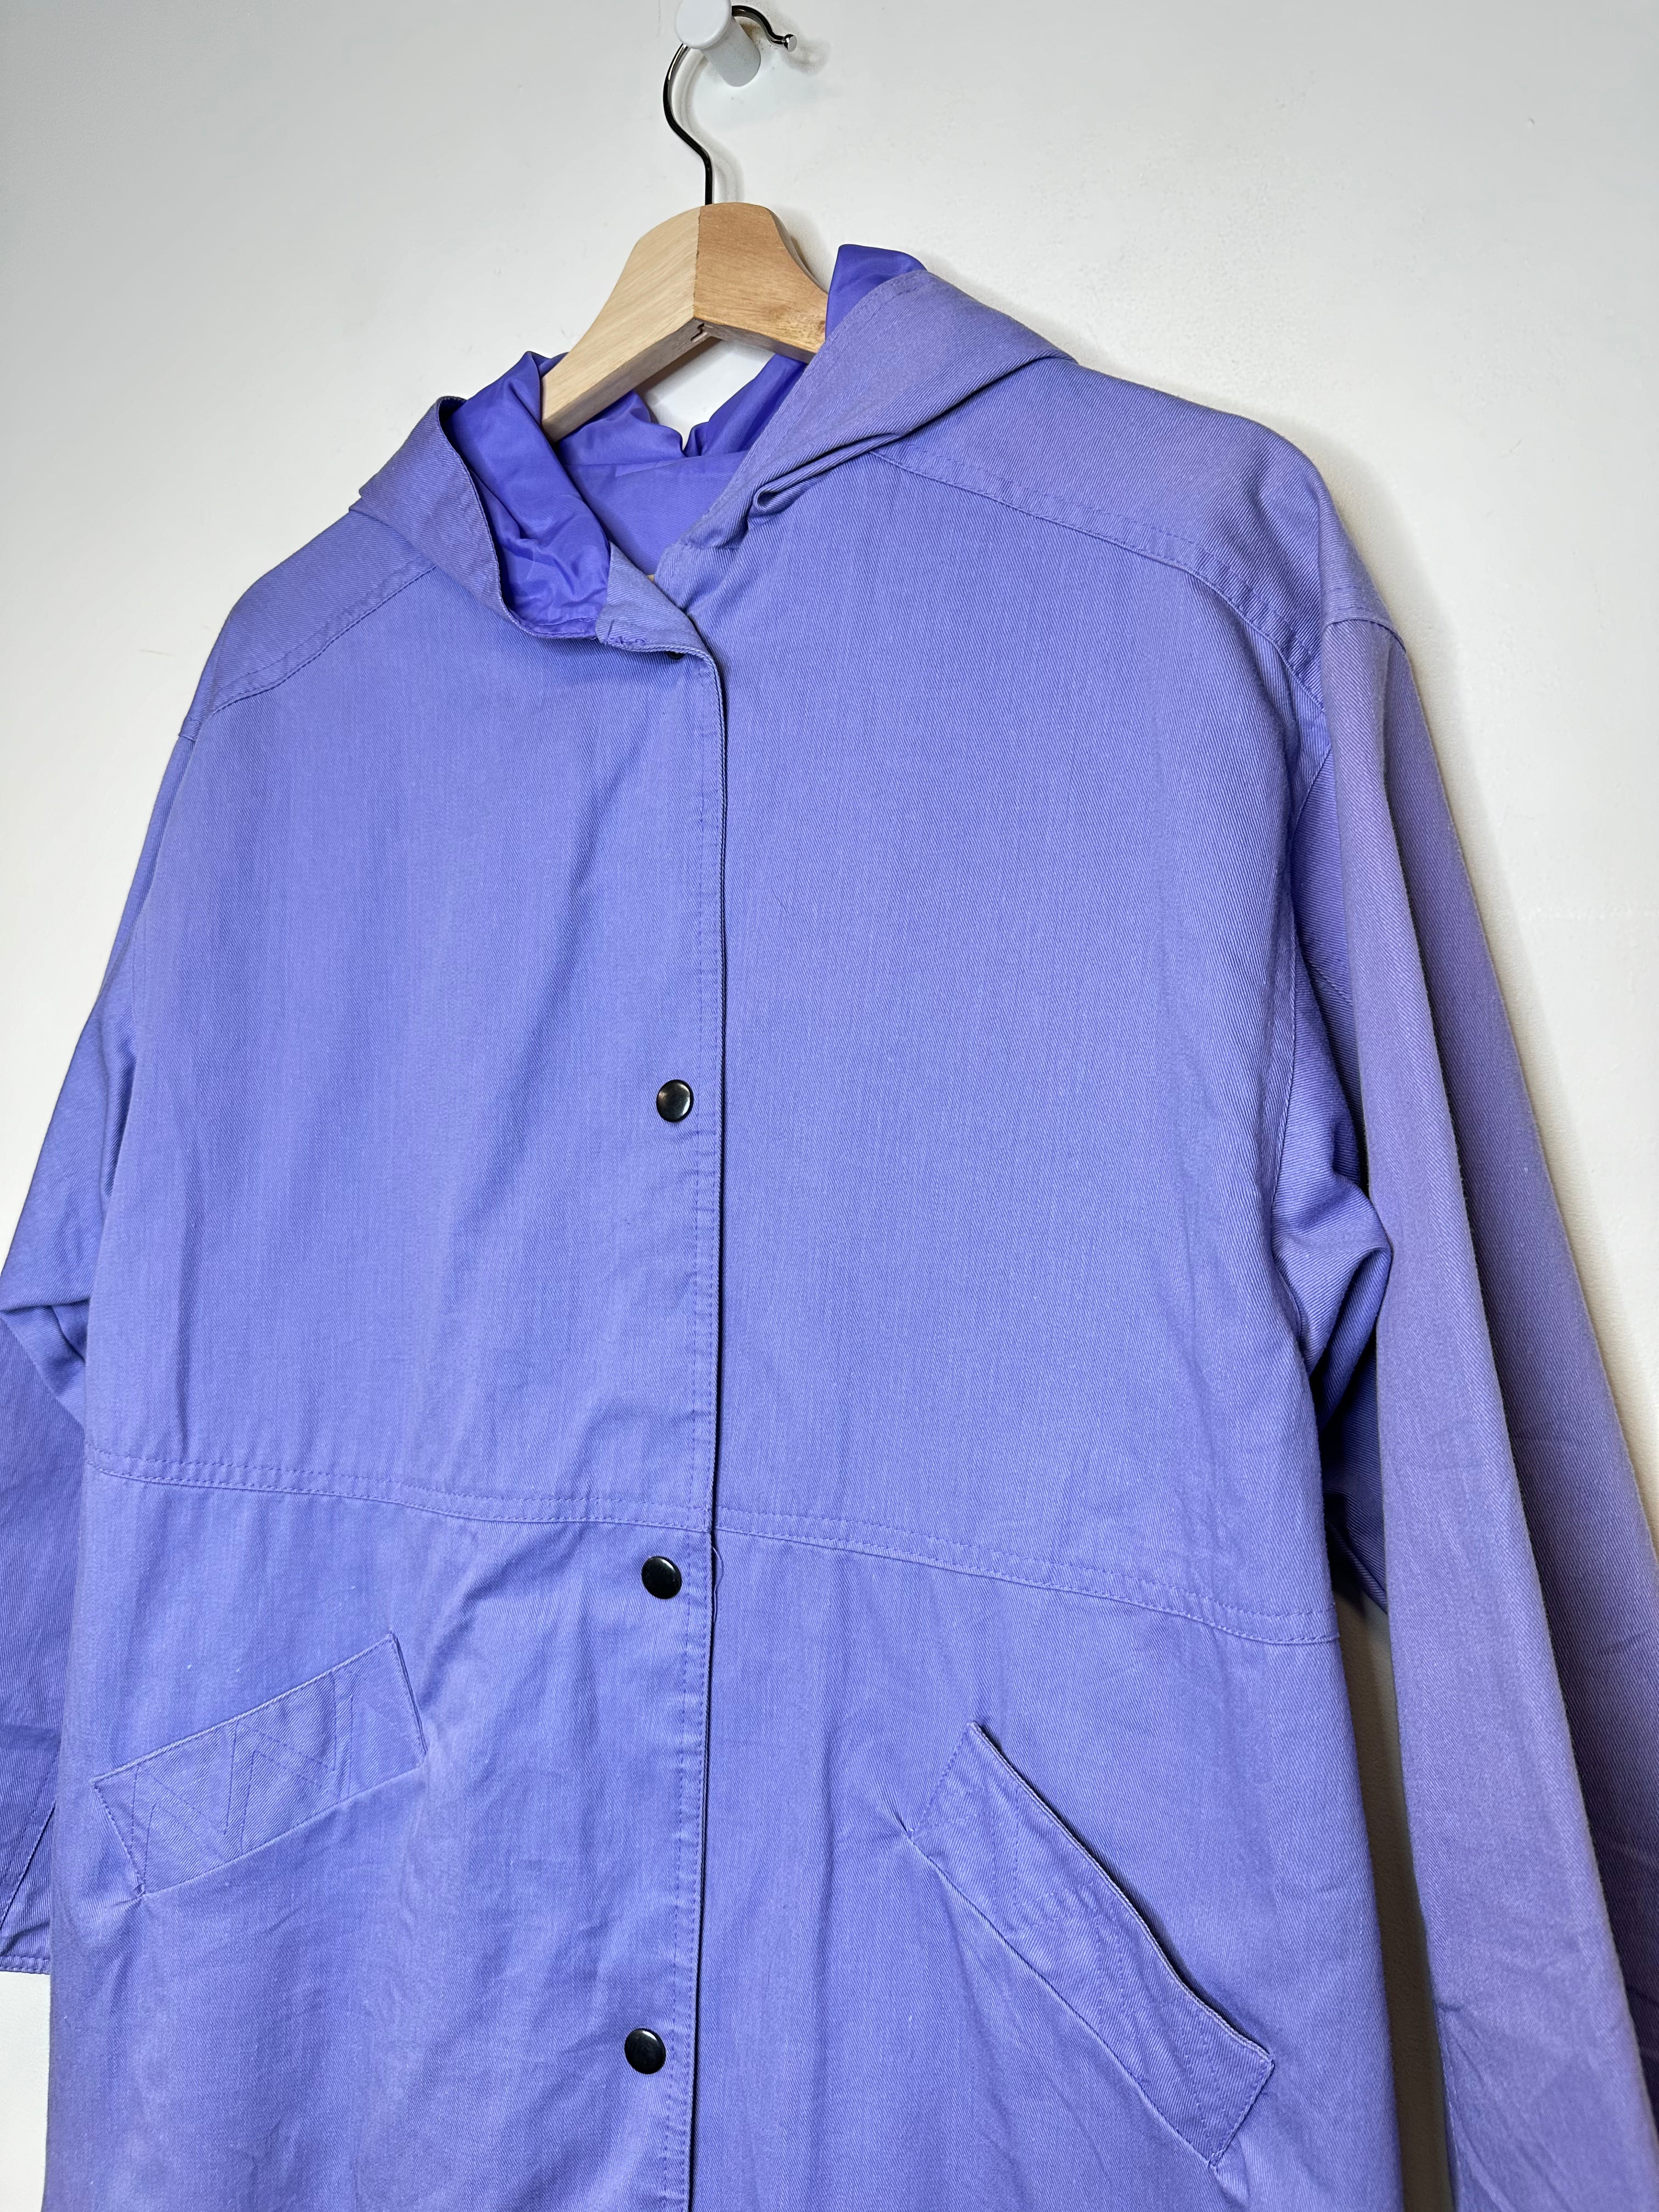 Vintage Purple Cotton Jacket - M